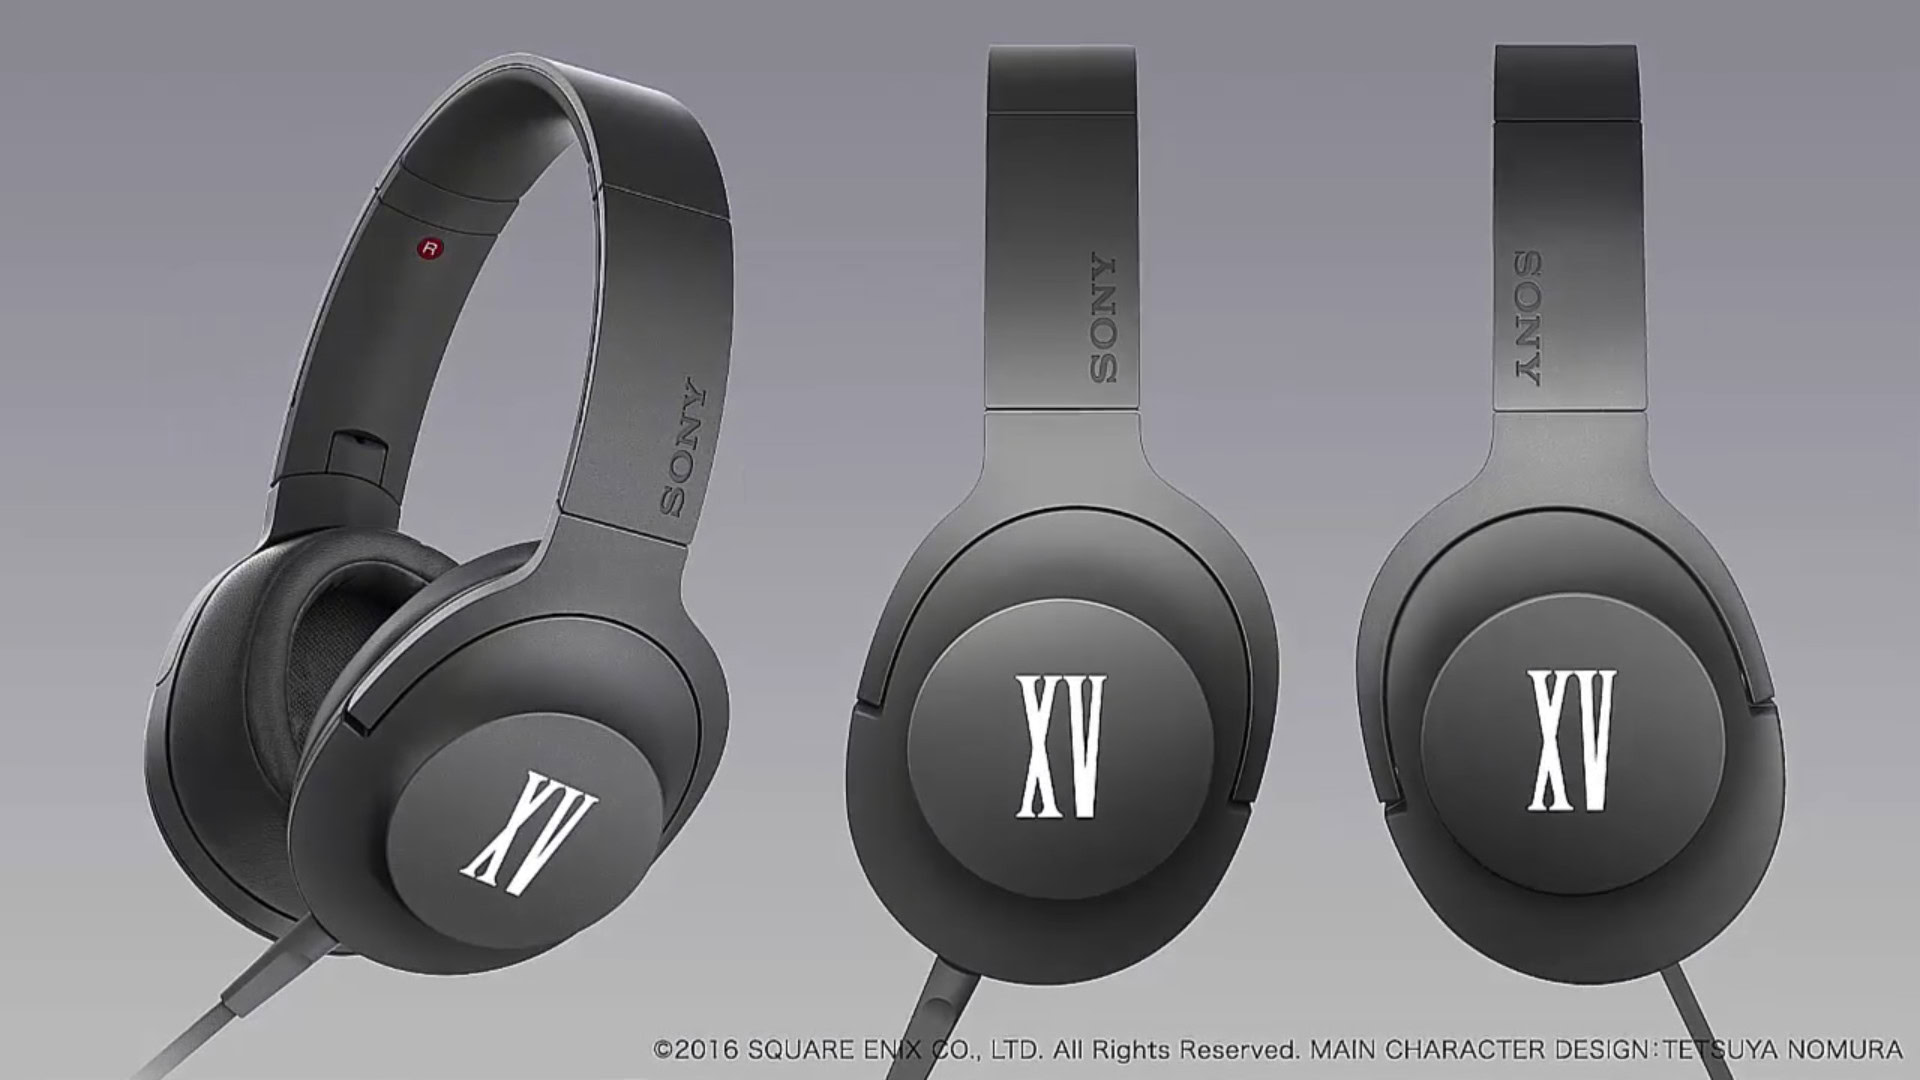 aa-sony-final-fantasy-xv-edition-walkman-headphones